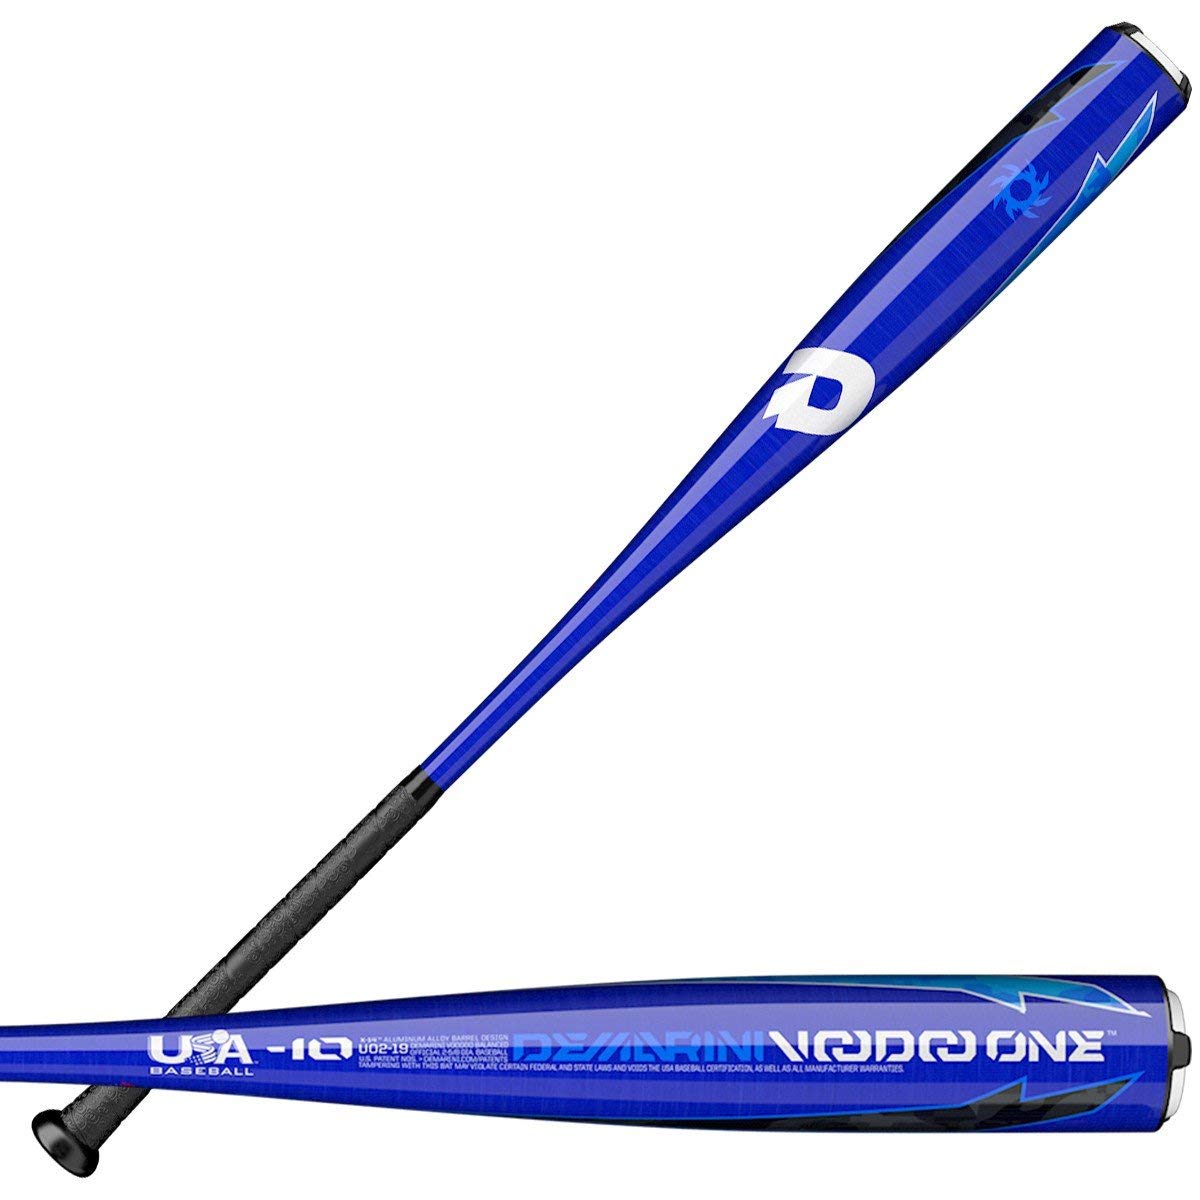 demarini-2019-voodoo-one-balanced-10-usa-baseball-bat-31-inch-21-oz WTDXUO22131-19 DeMarini 887768711931 `-10 Length to Weight Ratio Balanced Swing Weight One-Piece 100% X14